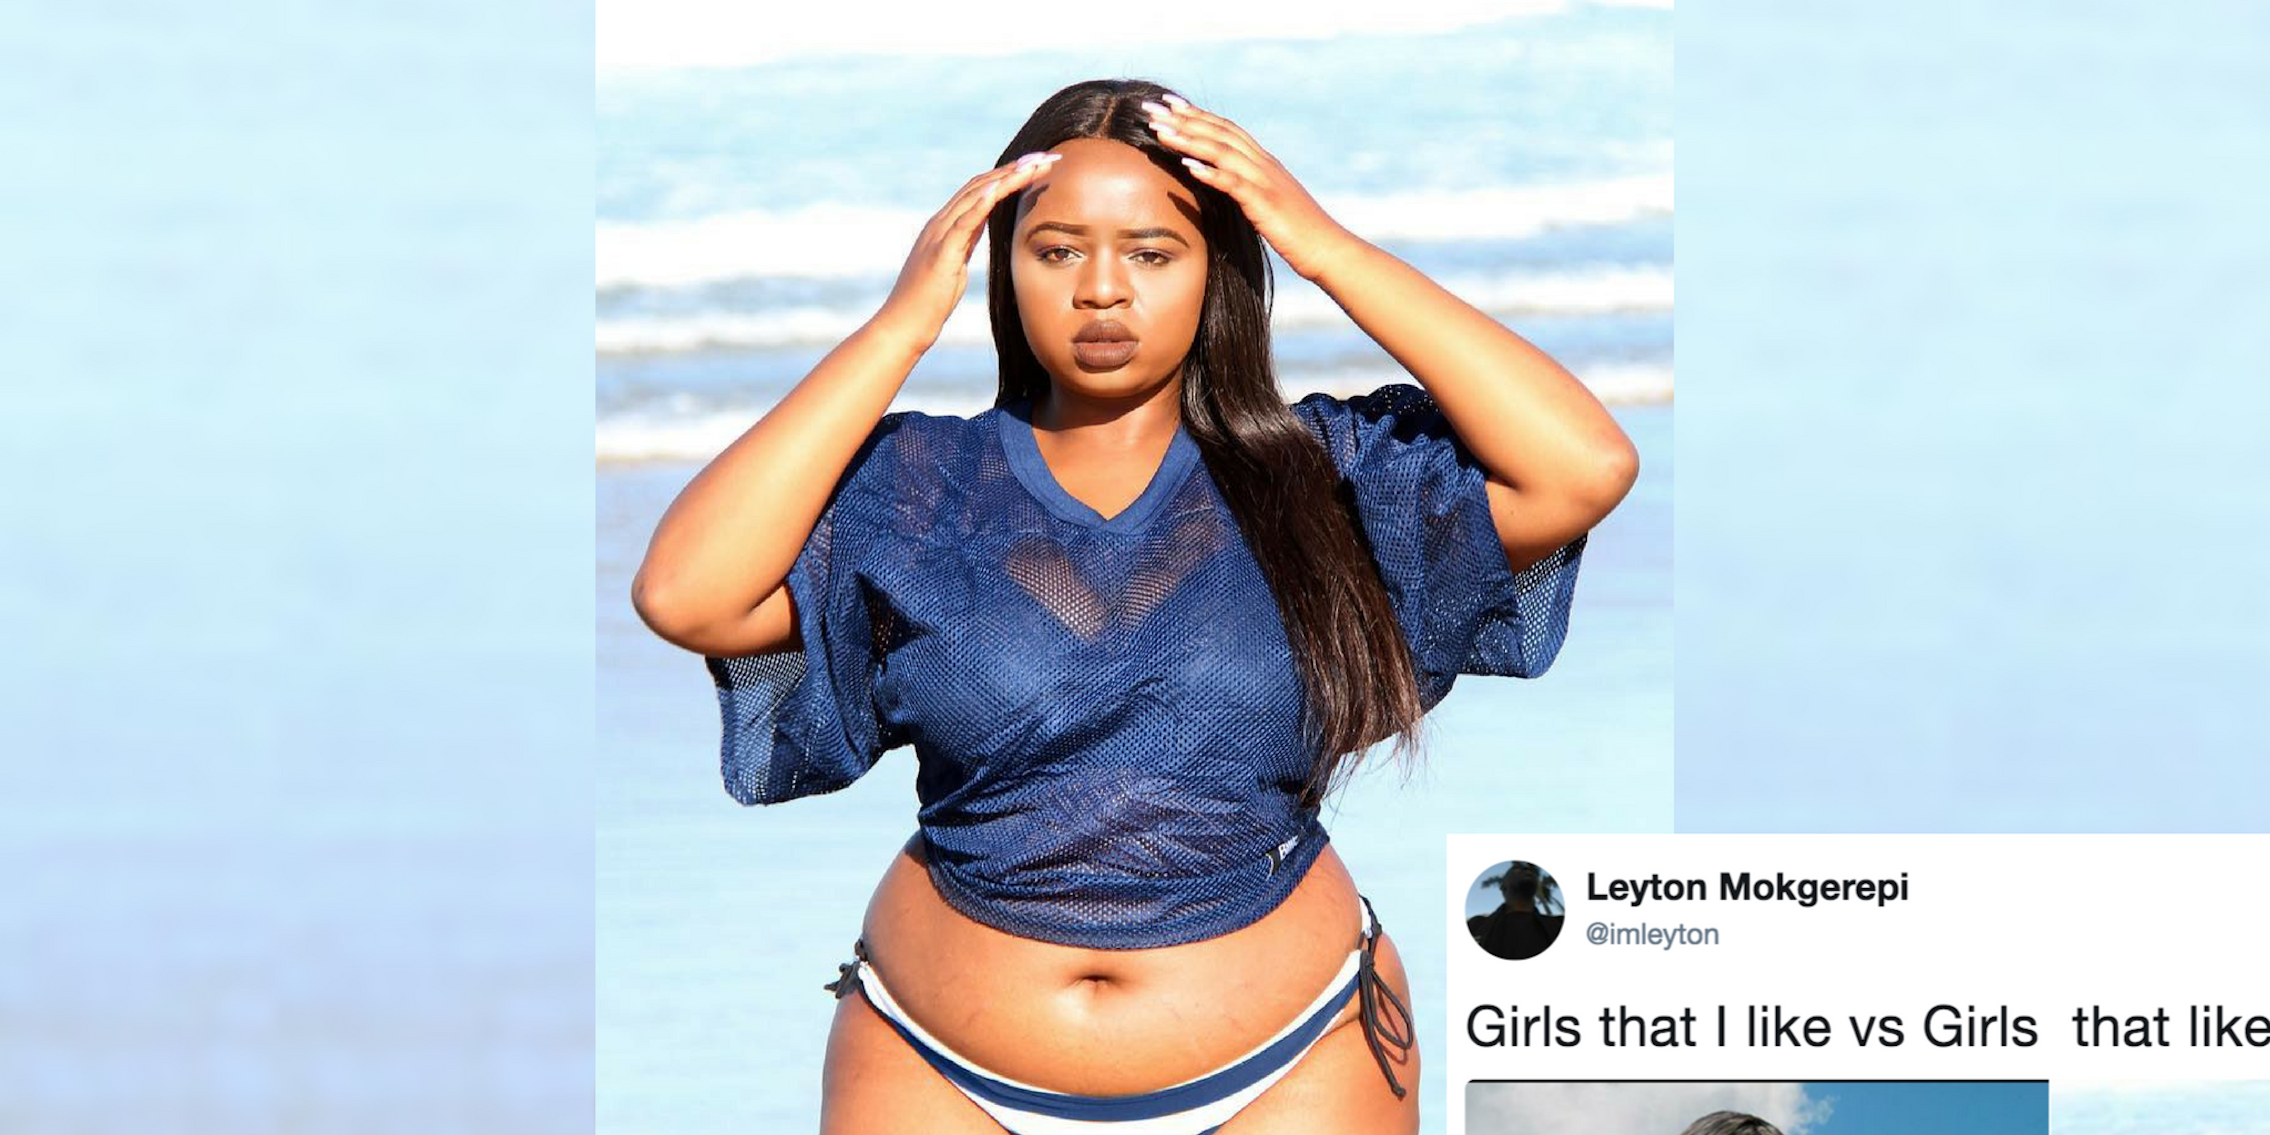 Lesego Legobane, the model who shut down a fat-shaming meme